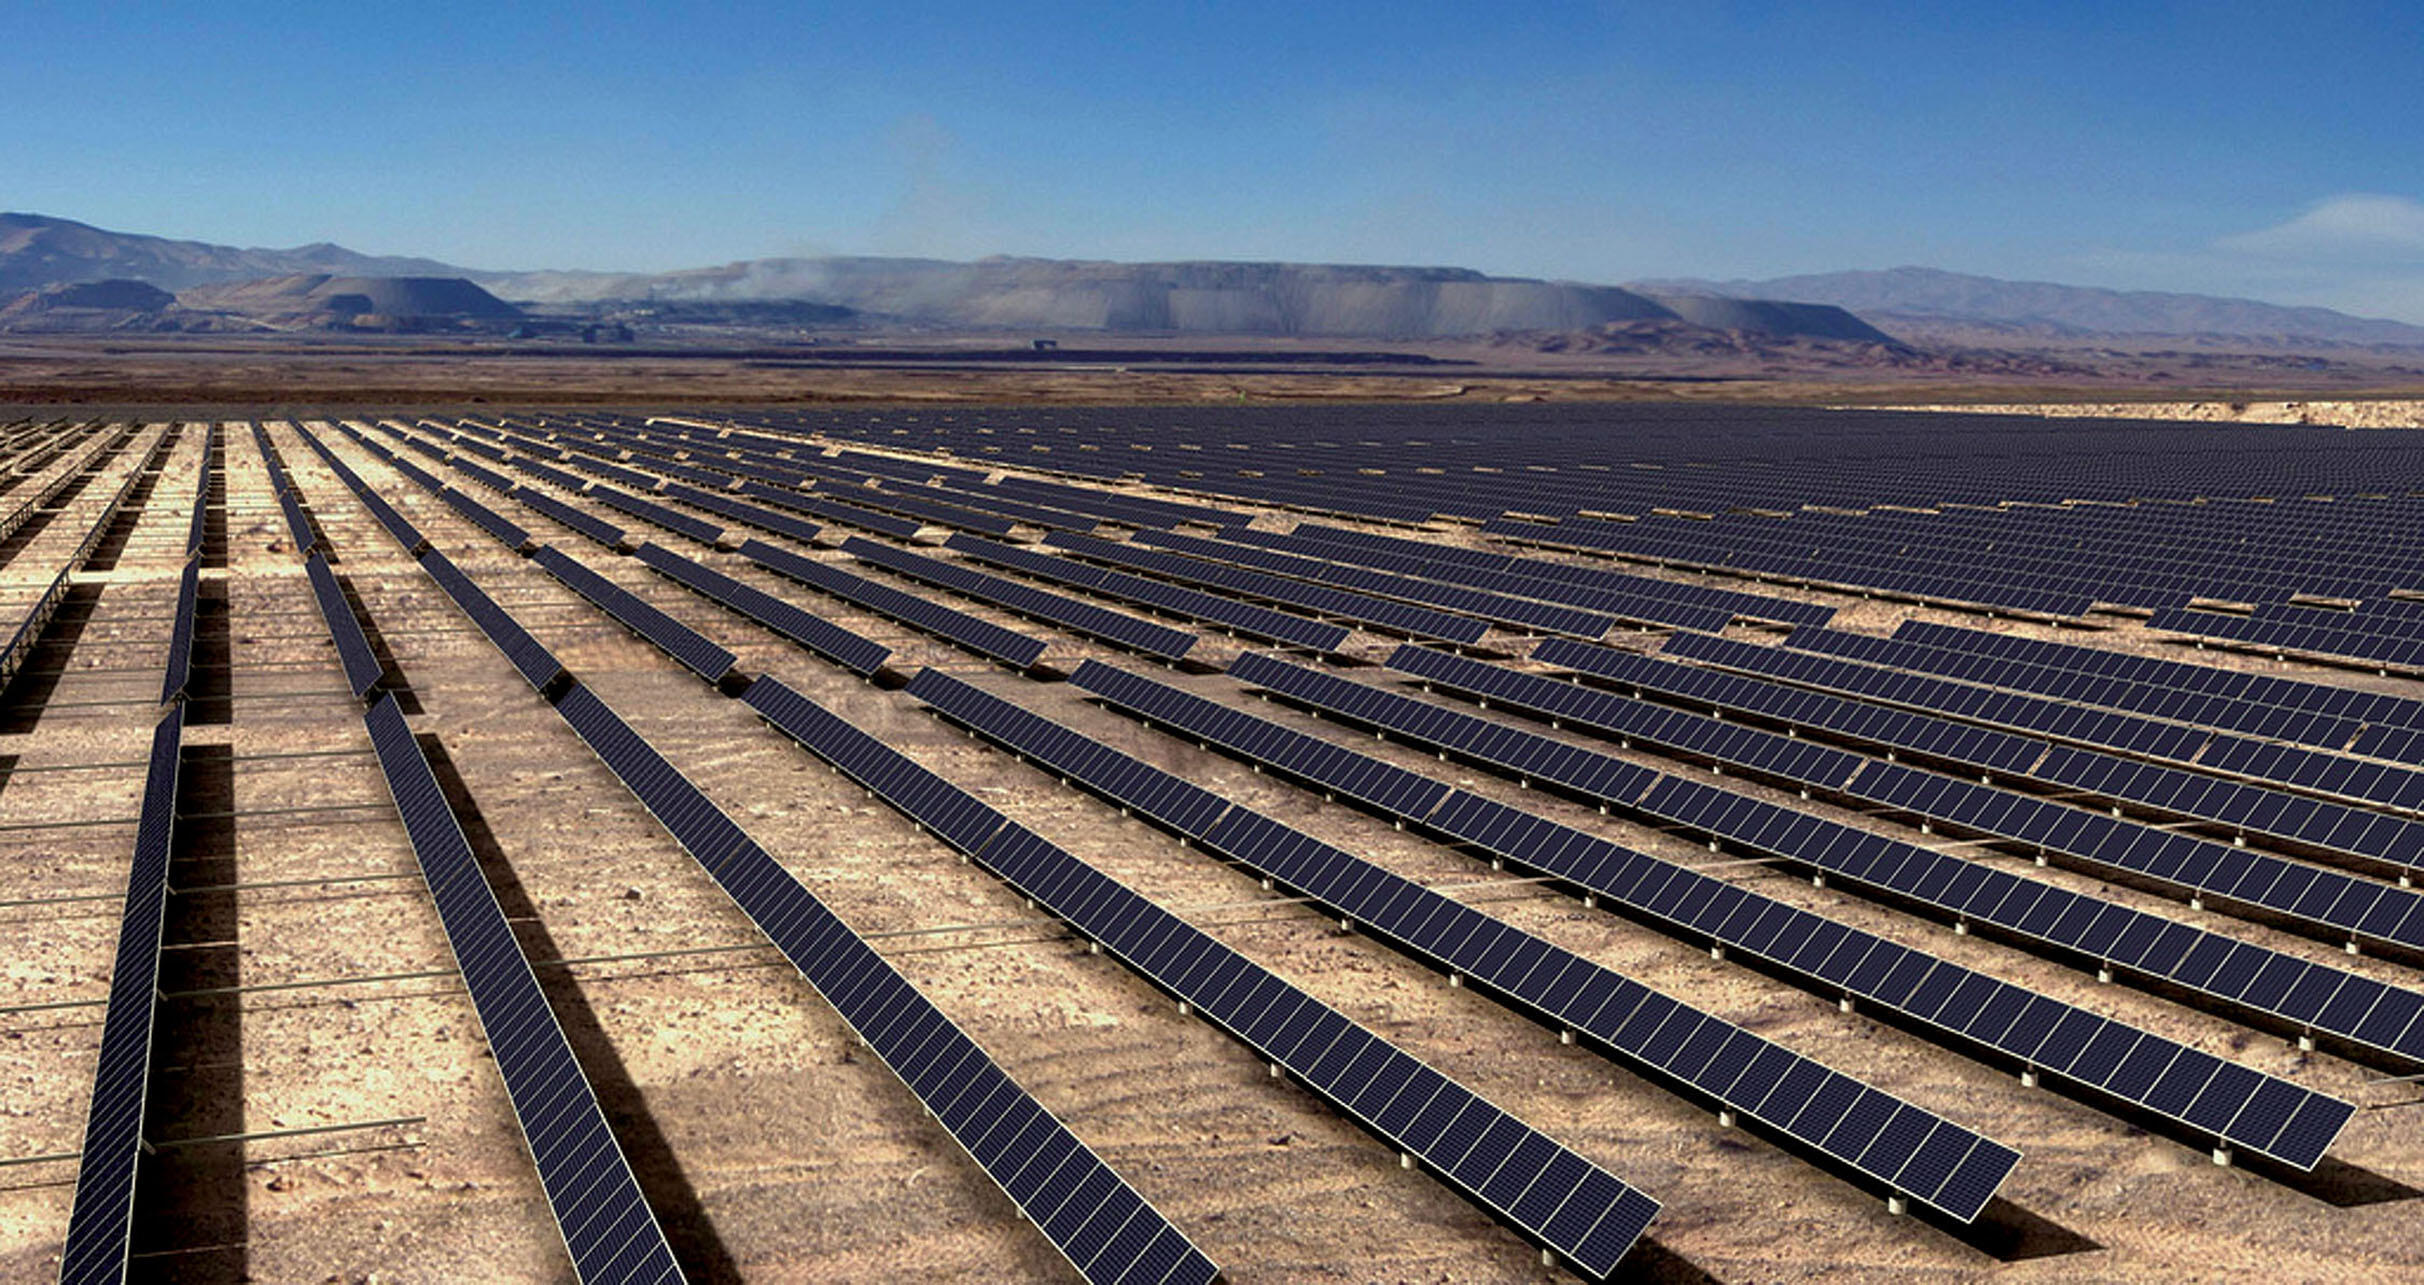 Rows and rows of photovoltaic panels form a huge solar farm in Chile’s Atacama Desert. (Photo by Jaim Peña.)